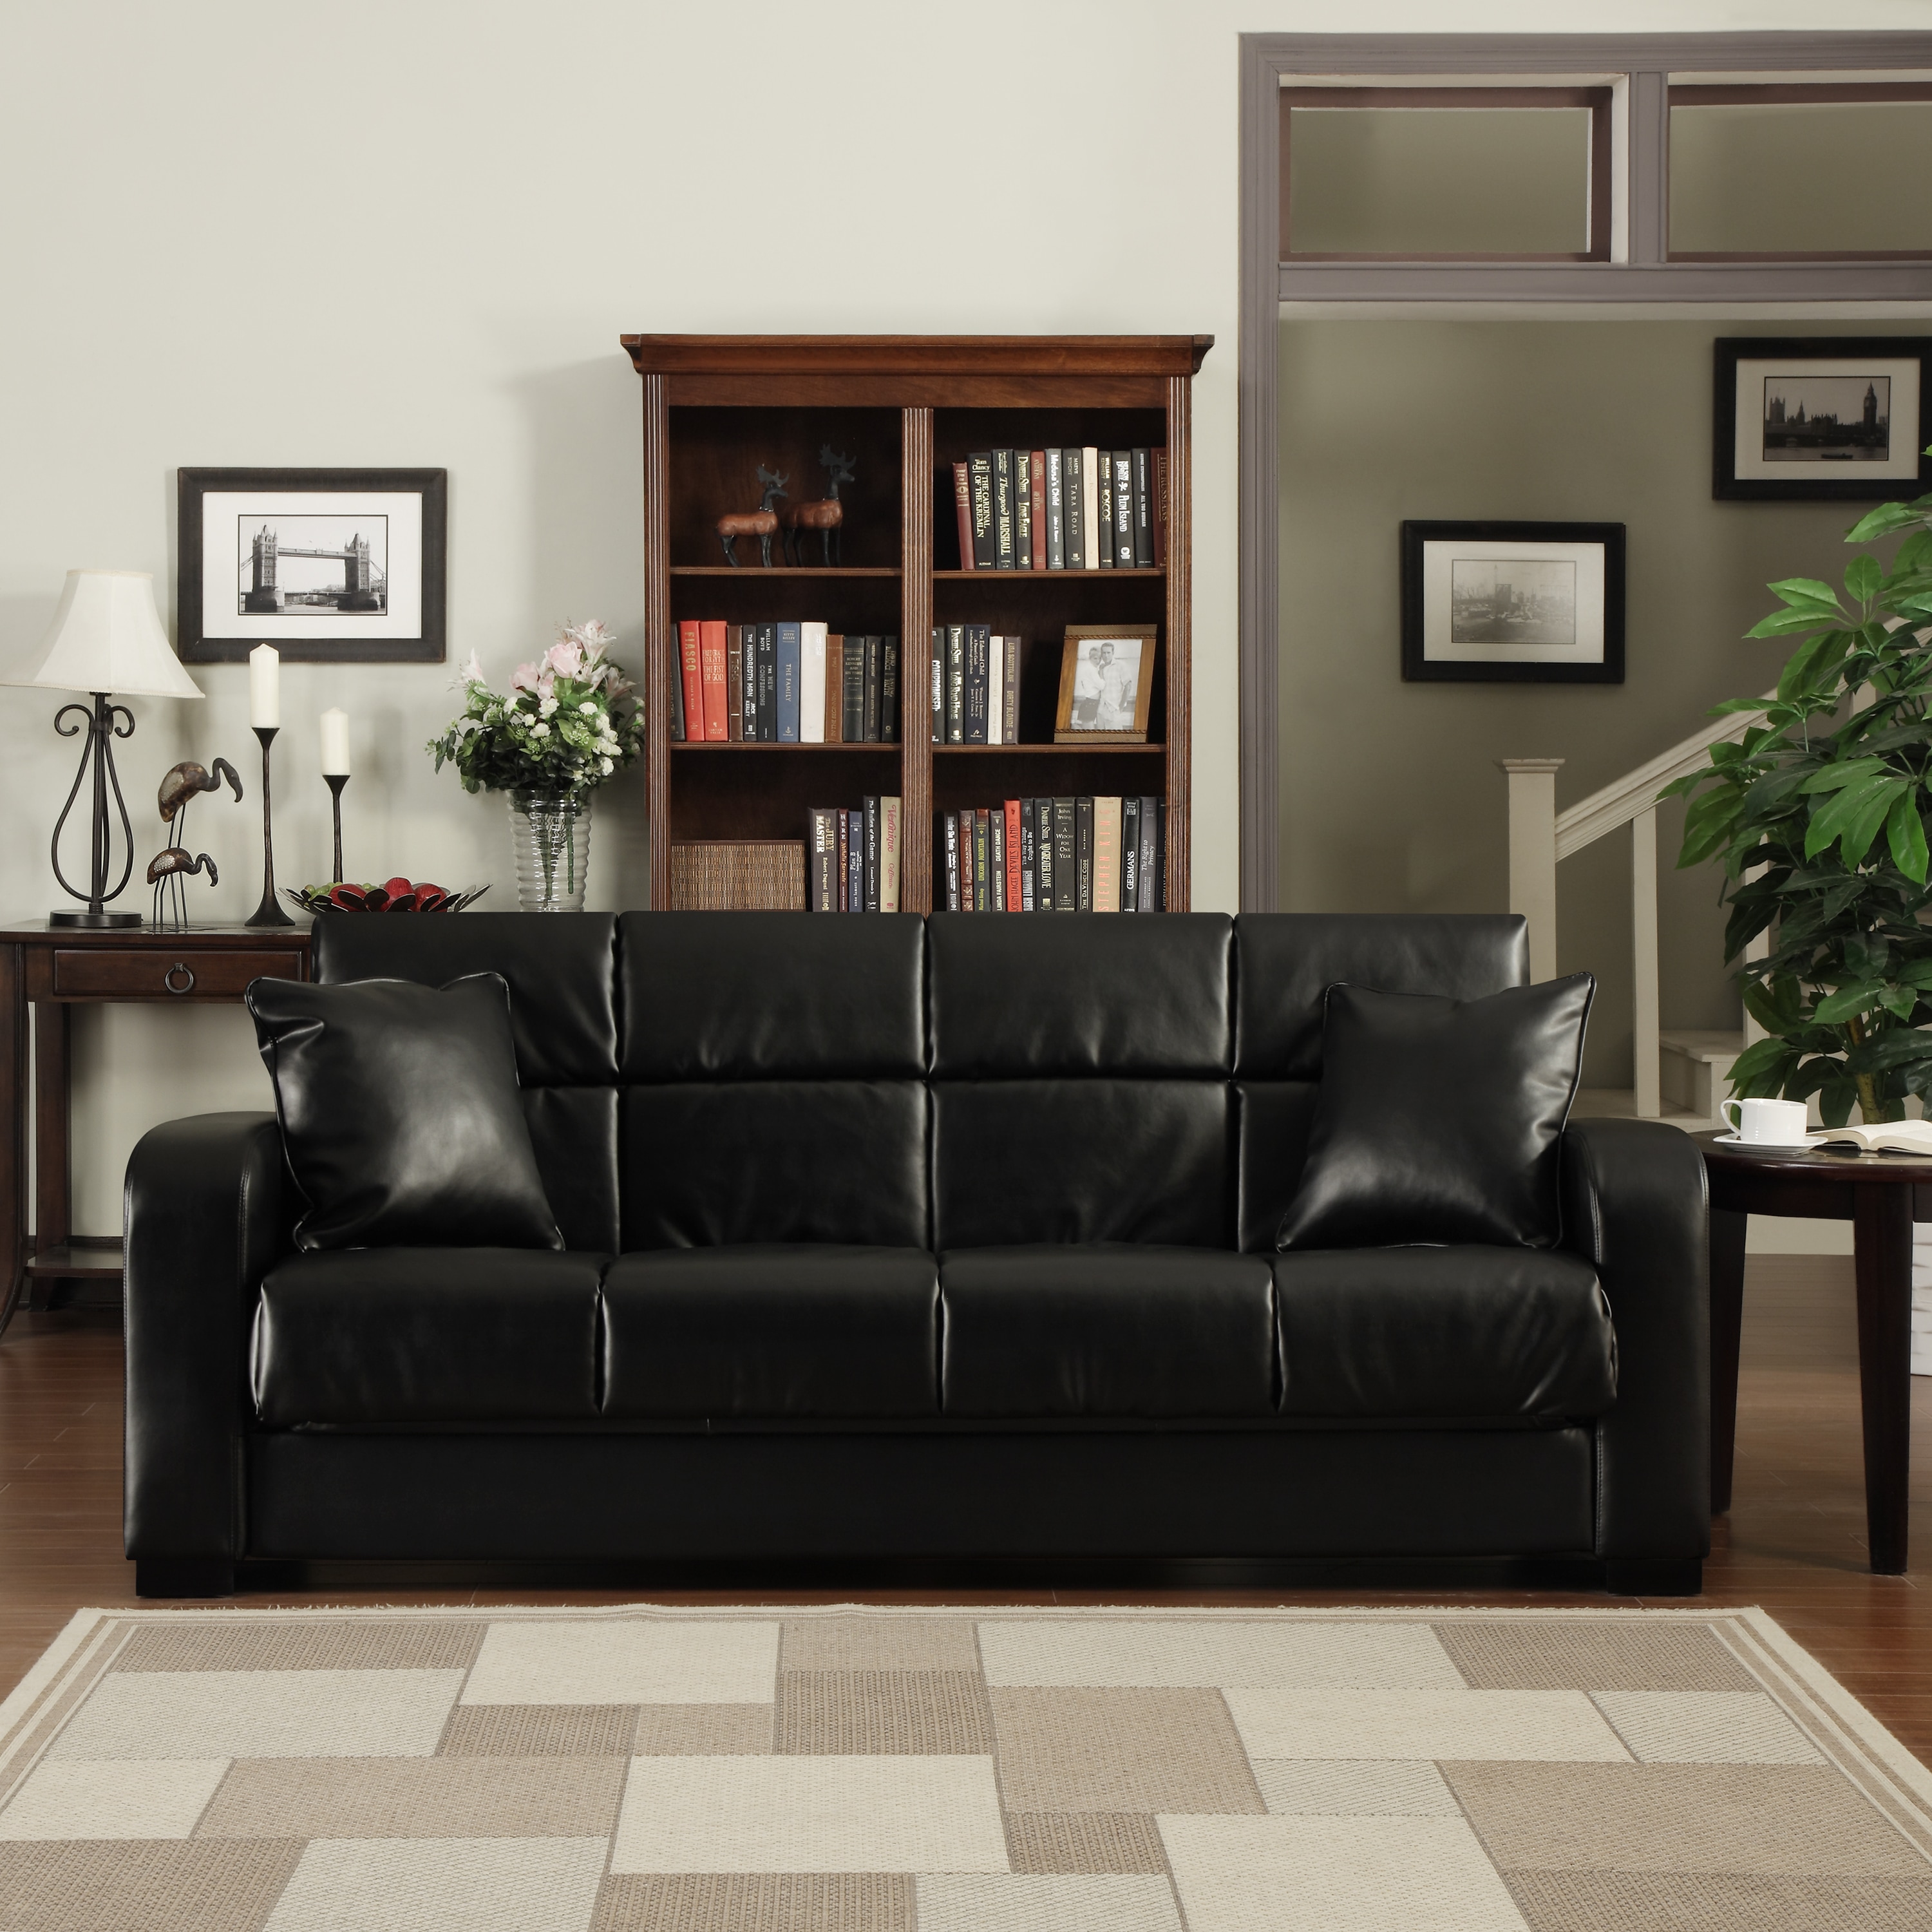 Portfolio Turco Convert a Couch Black Renu Leather Futon Sofa Sleeper